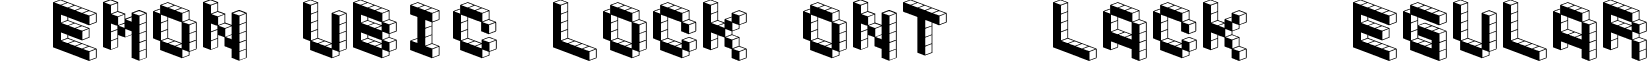 DemonCubicBlockFont Black Regular font - cubicblock_b.ttf